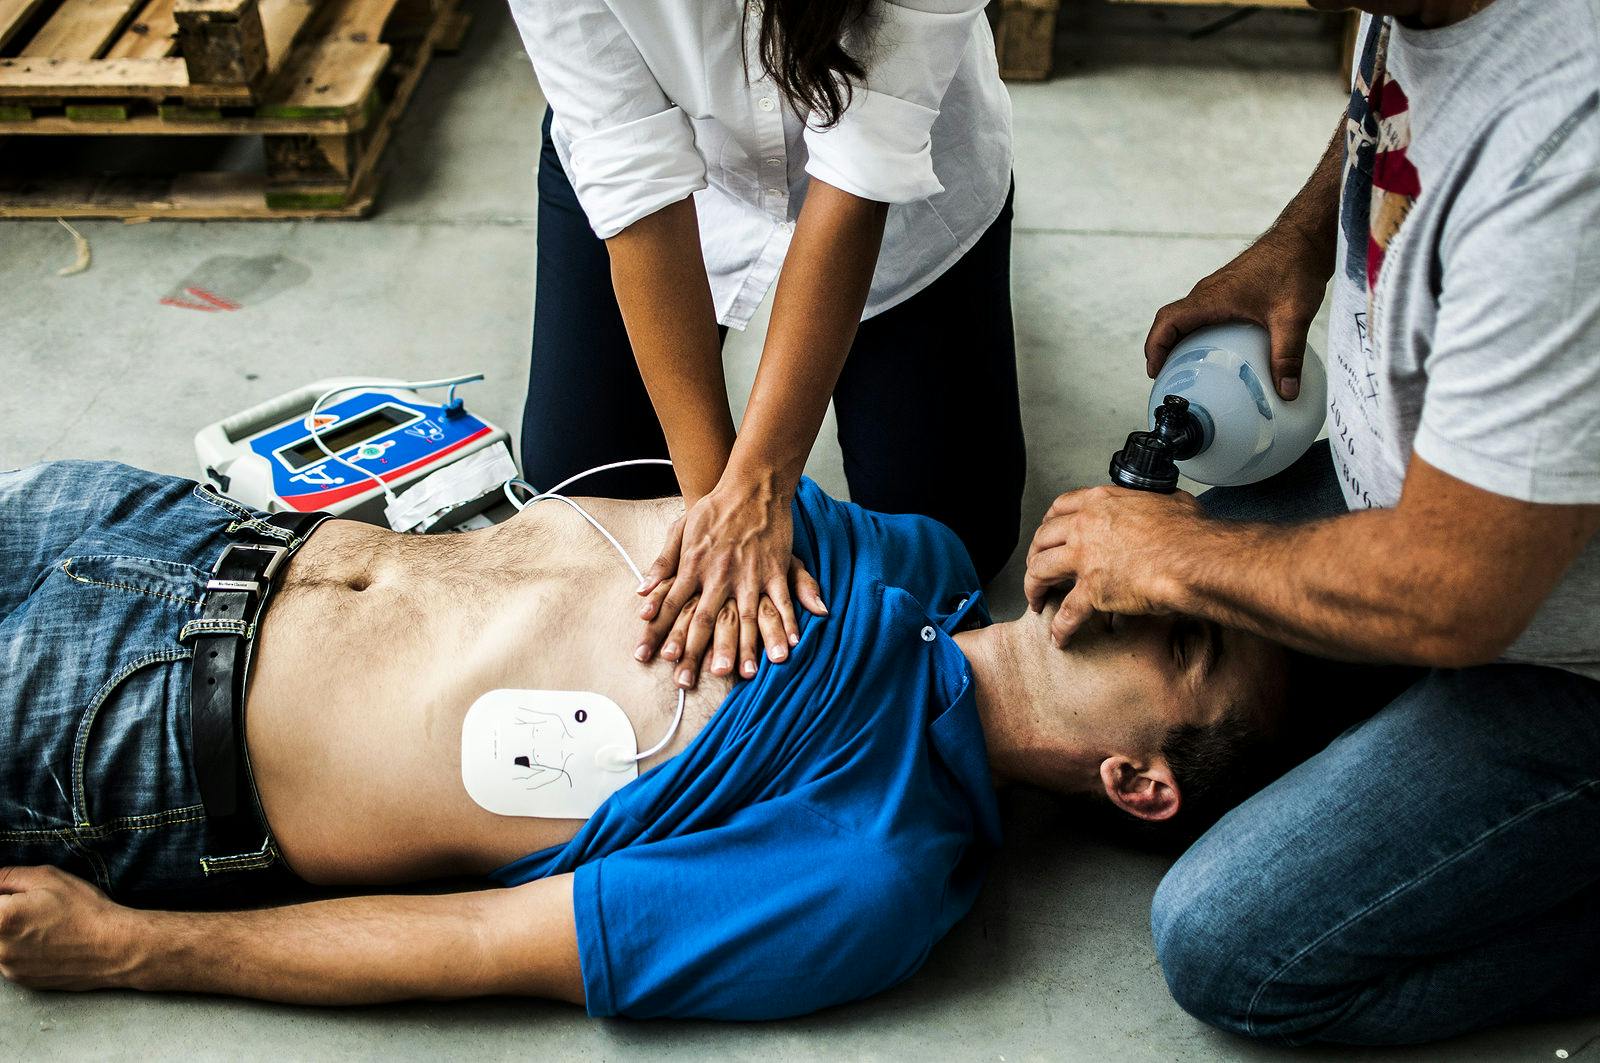 man having a heart attack undergoing CPR